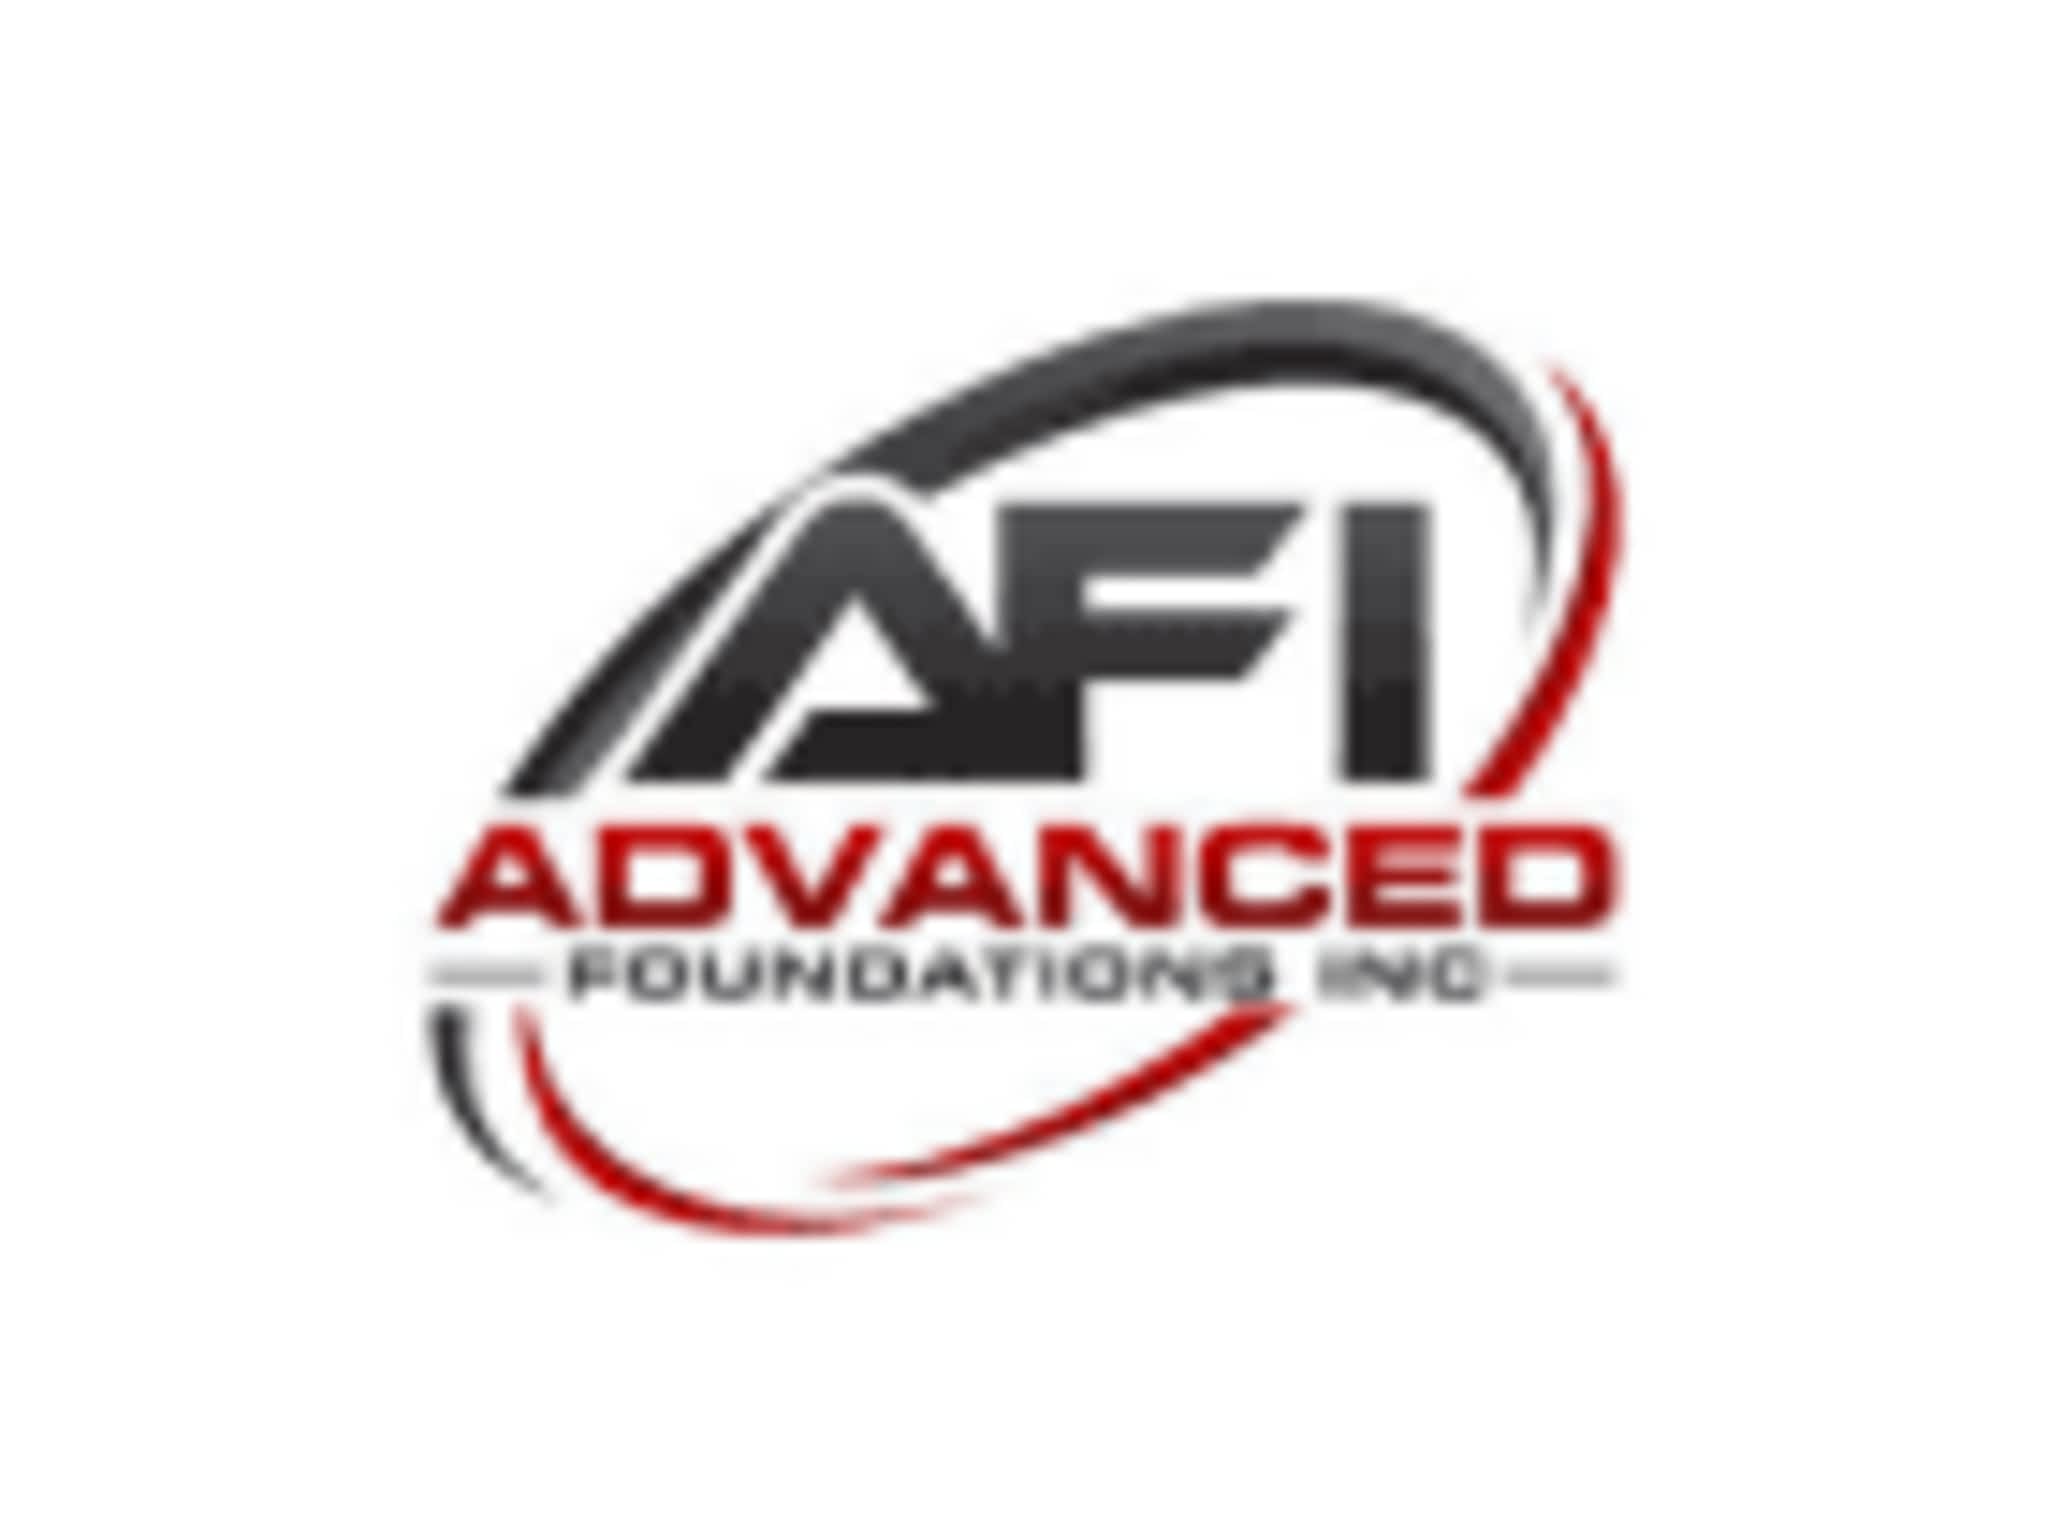 photo Advanced Foundations Inc